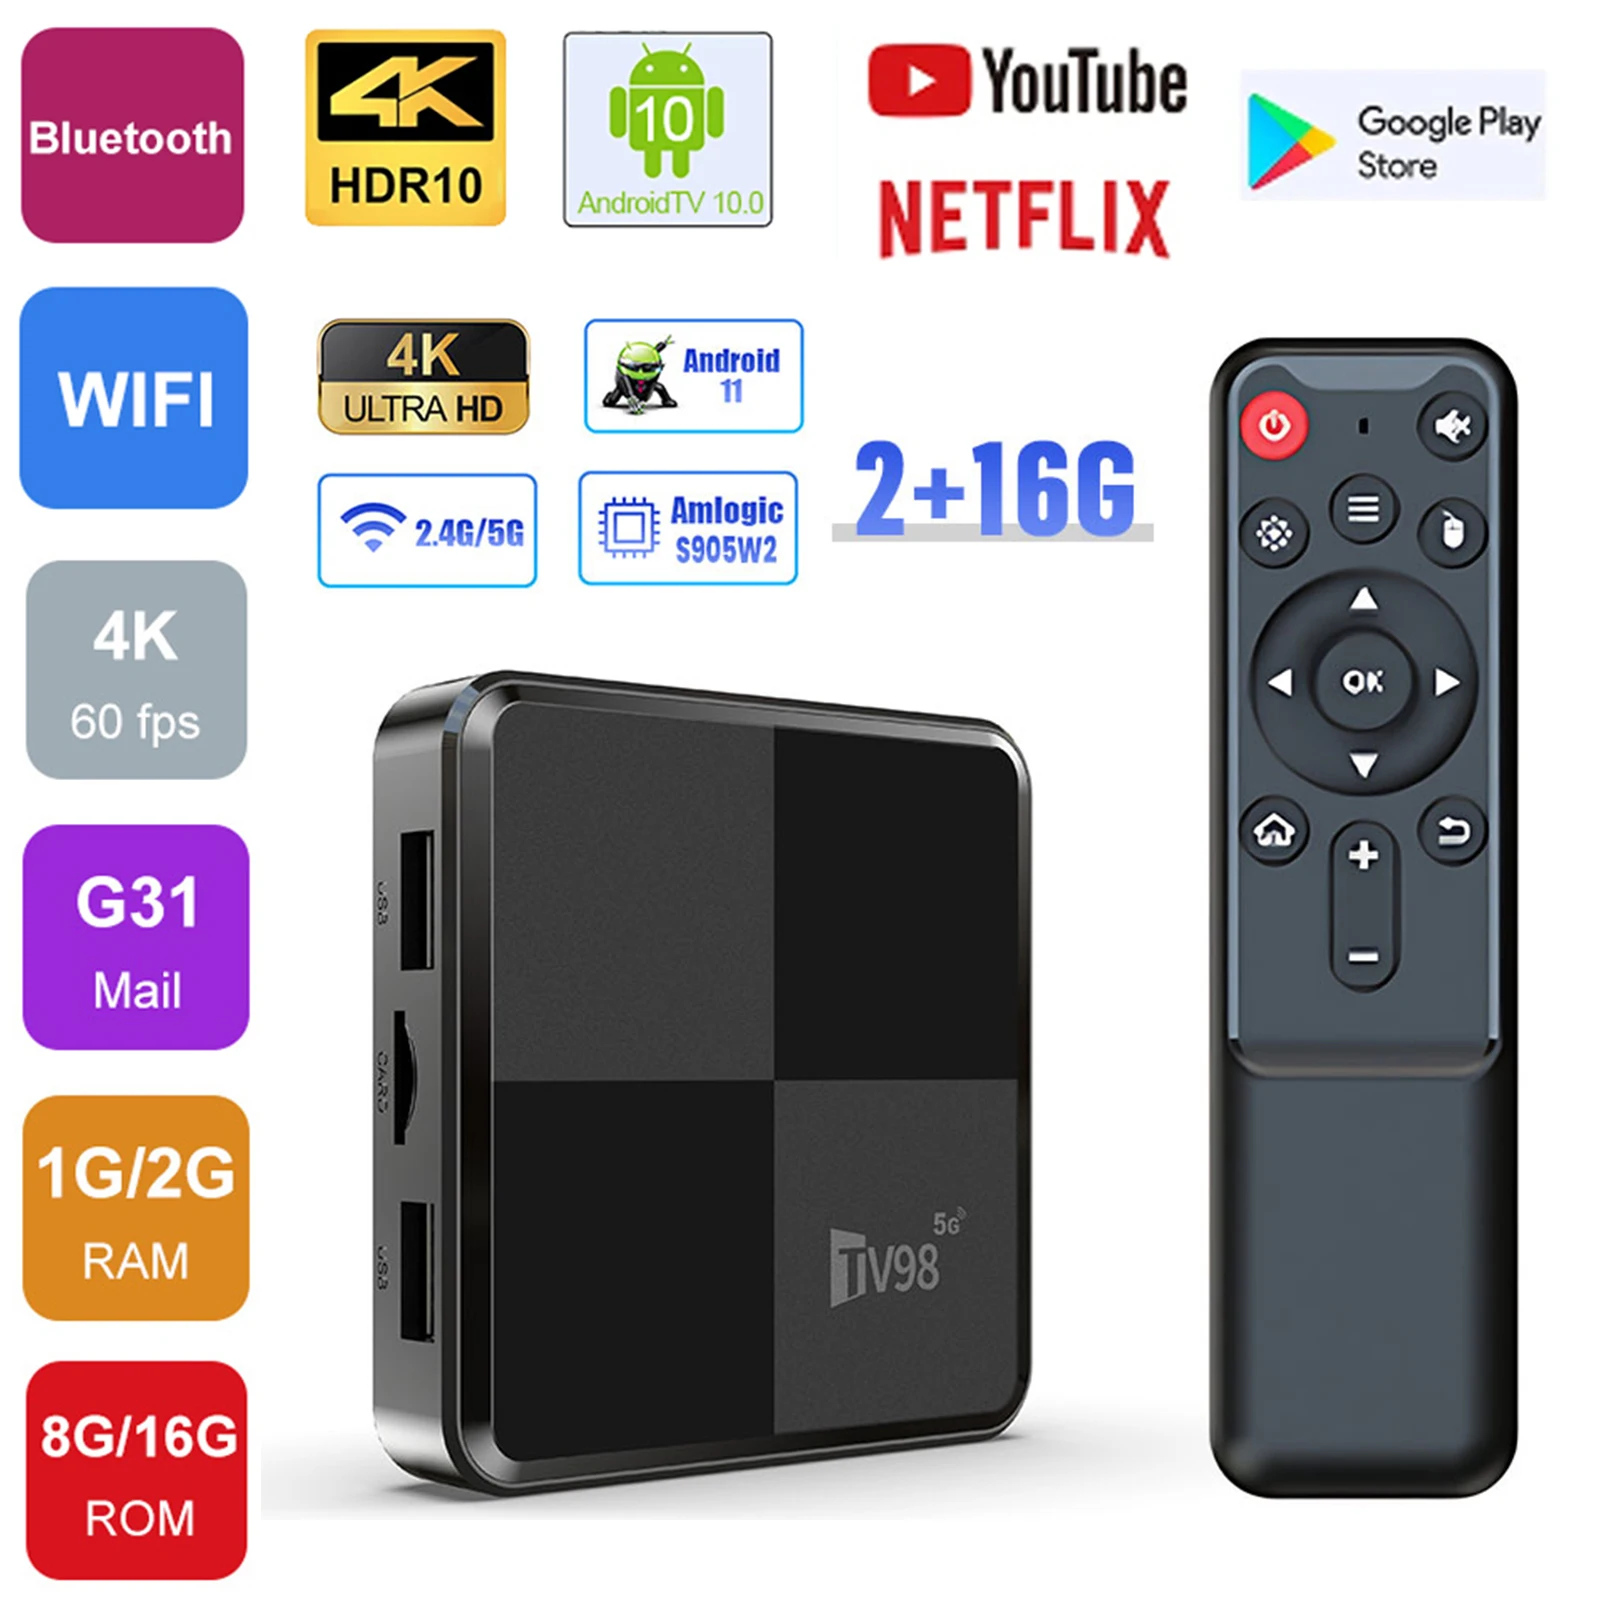 TV98 MINI Smart TV Stick Android 11.0 Smart TV Box 2.4G 5G WiFi 4K Media Player H.264 Set Top Box TV Receiver For Google YouTube